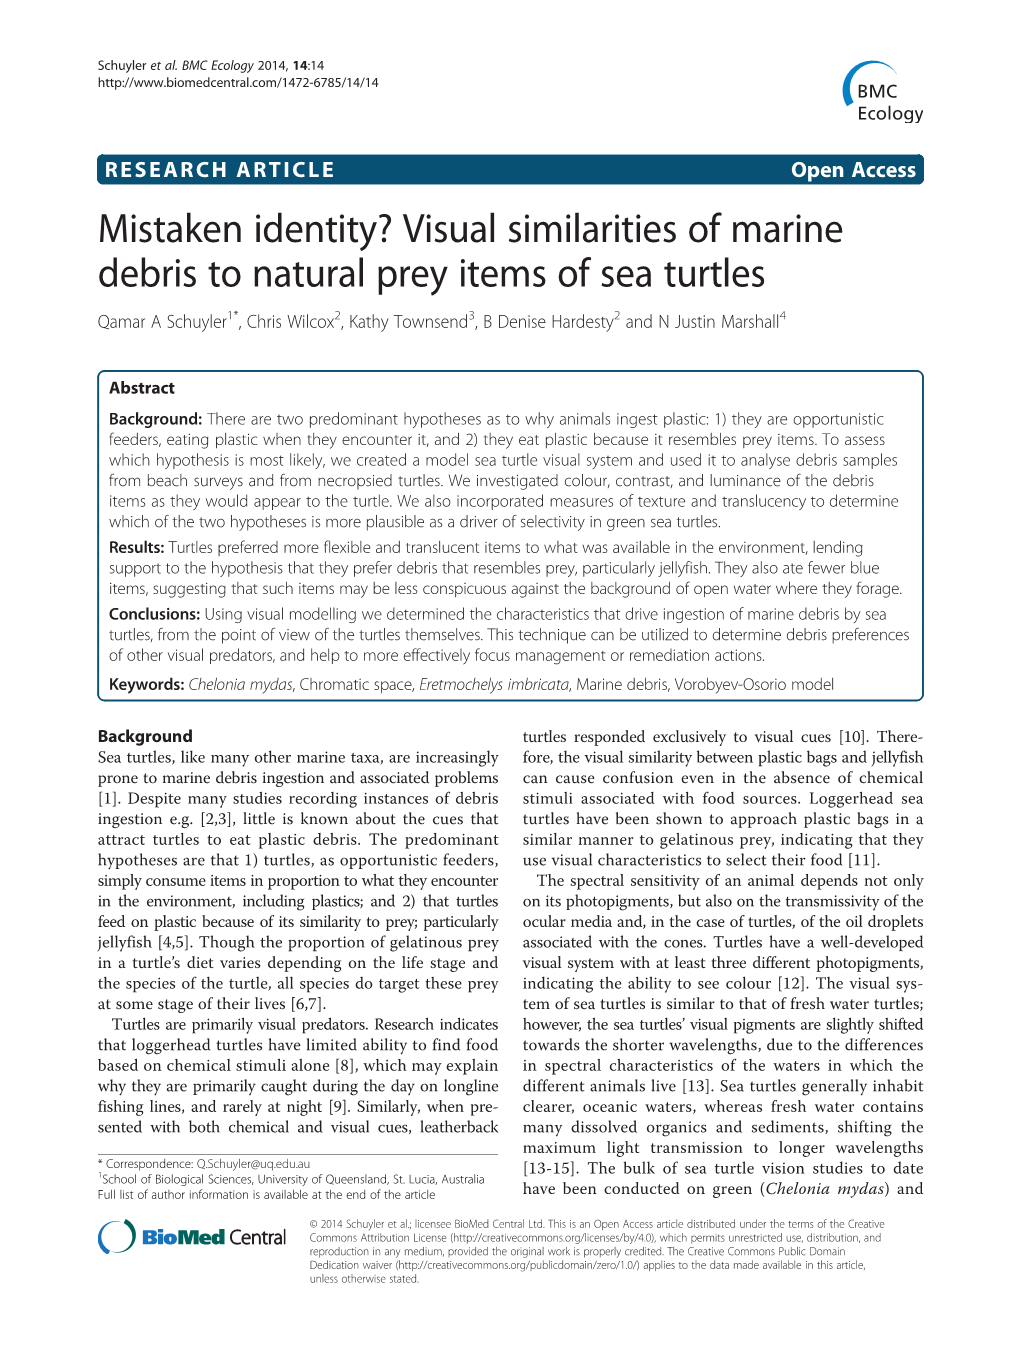 Visual Similarities of Marine Debris to Natural Prey Items of Sea Turtles